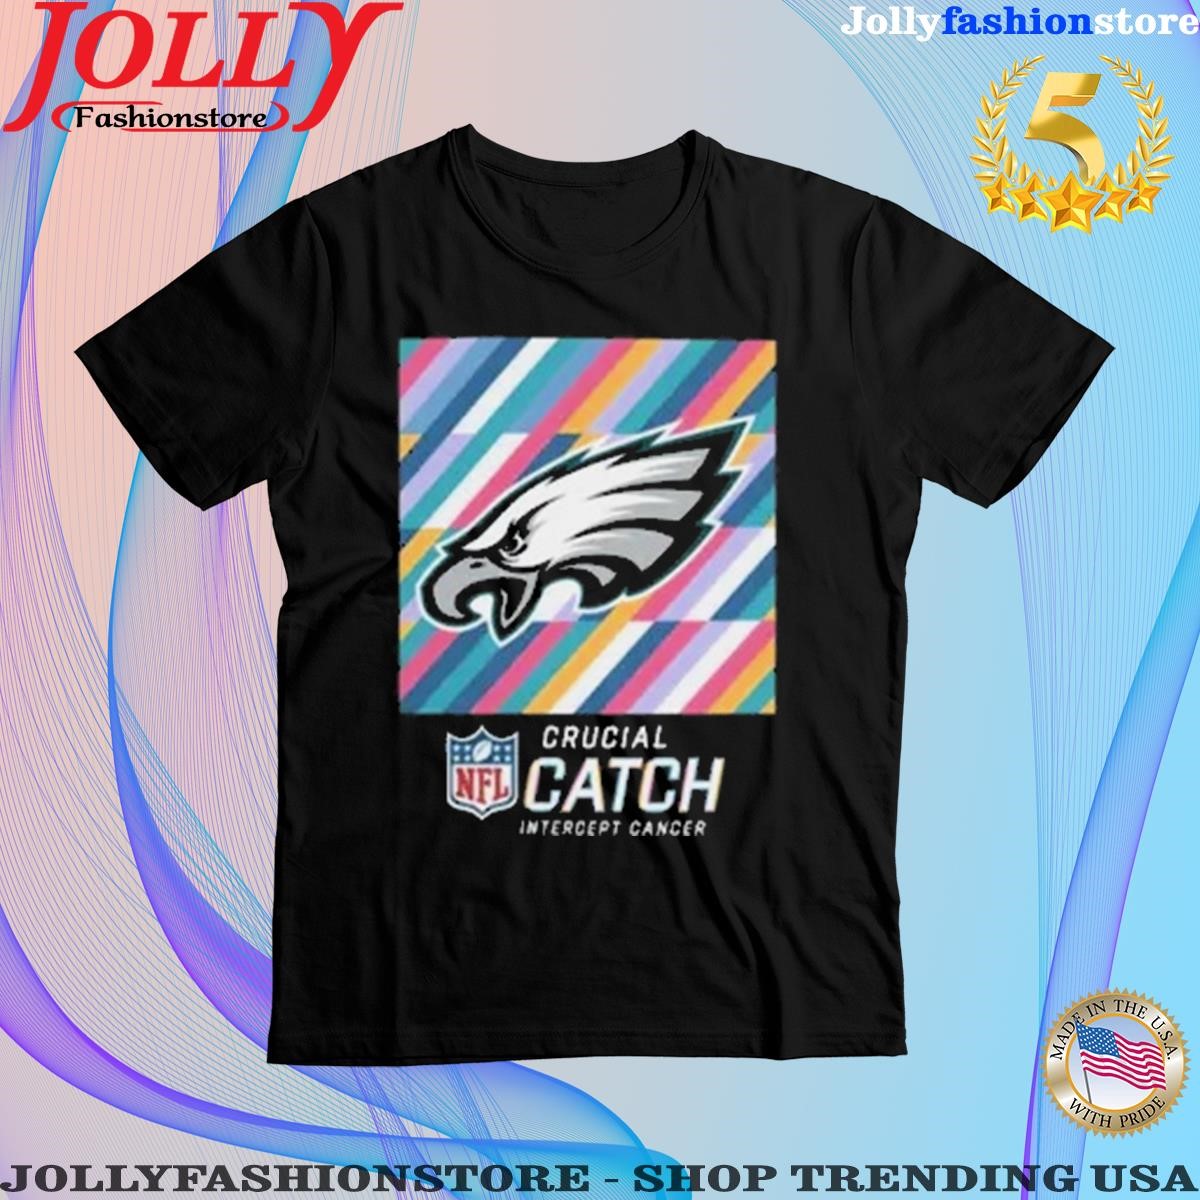 Philadelphia Eagles Intercept Cancer 2022 NFL Crucial Catch Shirt - Teespix  - Store Fashion LLC